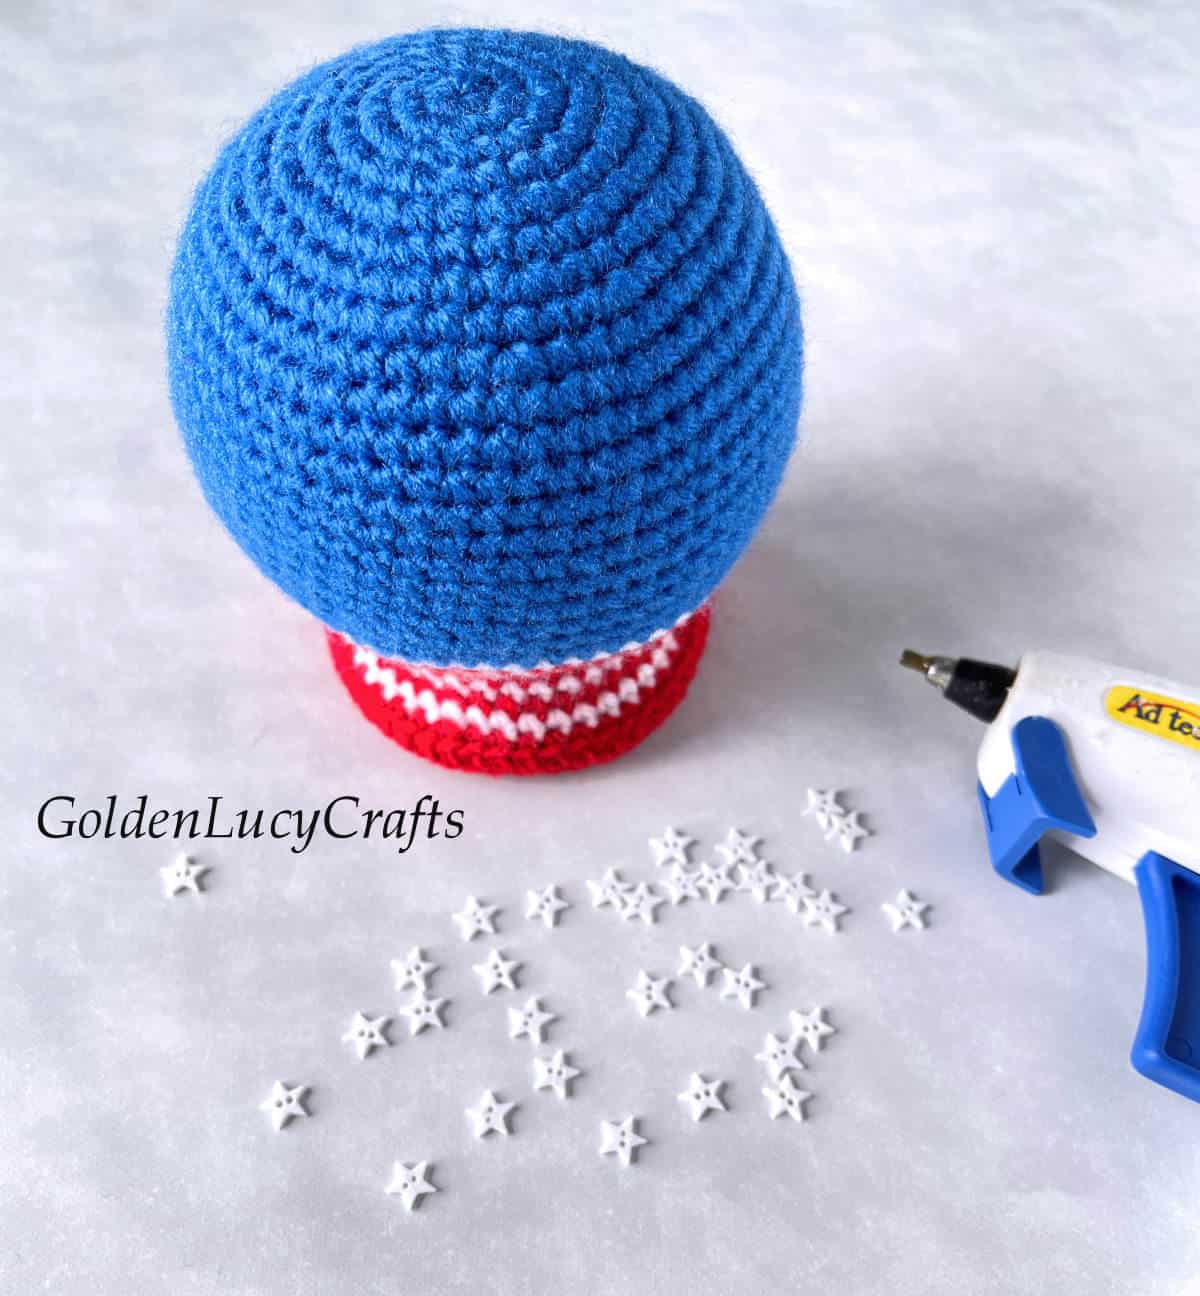 Crocheted snow globe, hot glue gun, small star buttons.